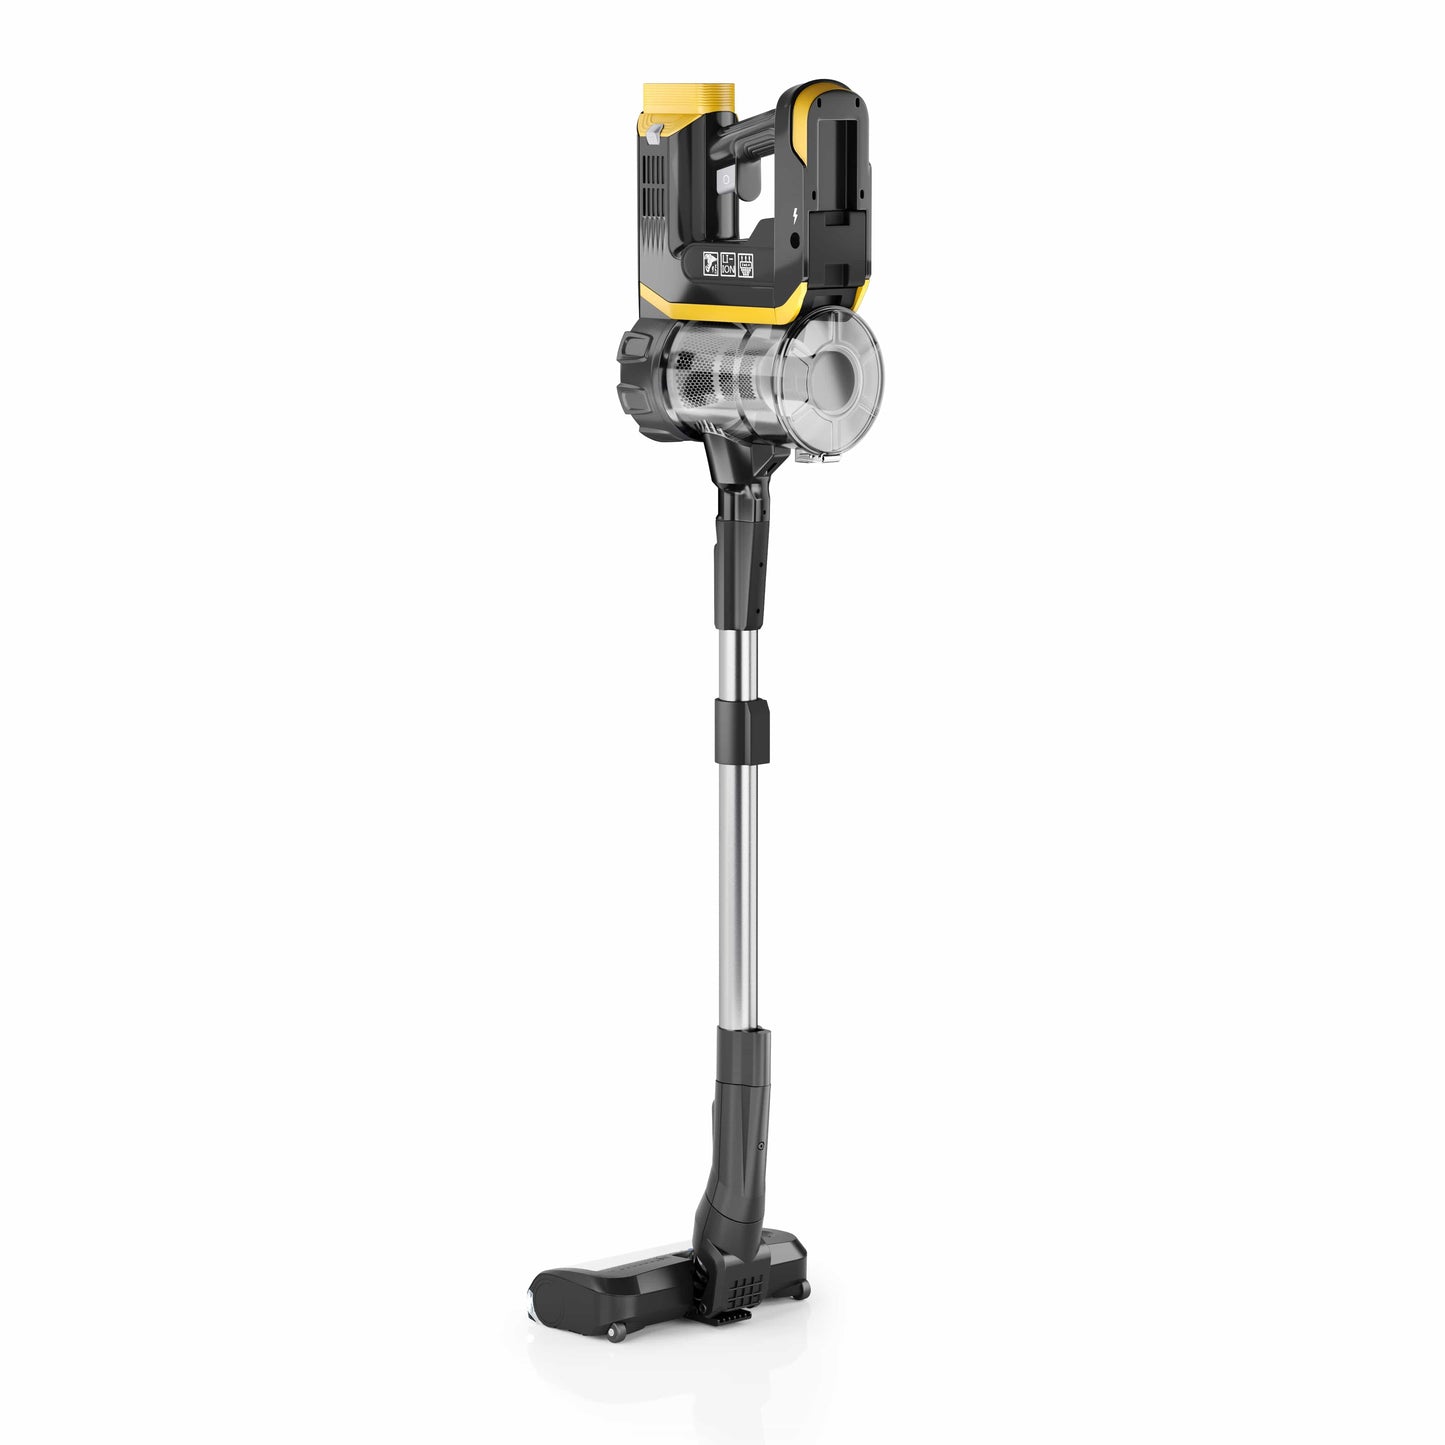 Prolux RS7 PRO Cordless Handheld Stick Vacuum